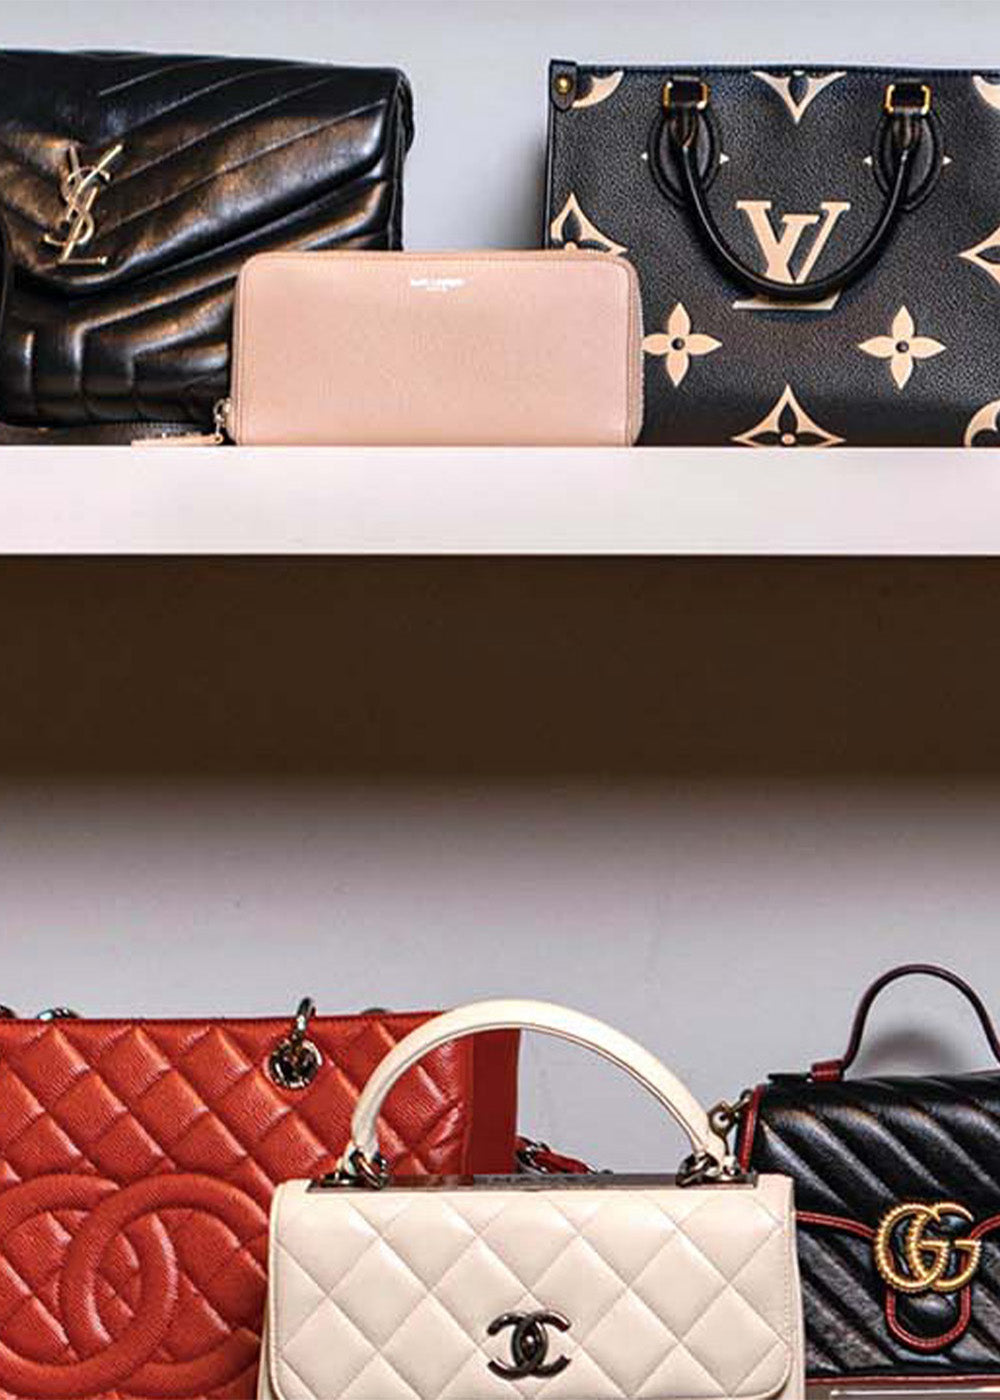 shop designer handbags in raleigh 